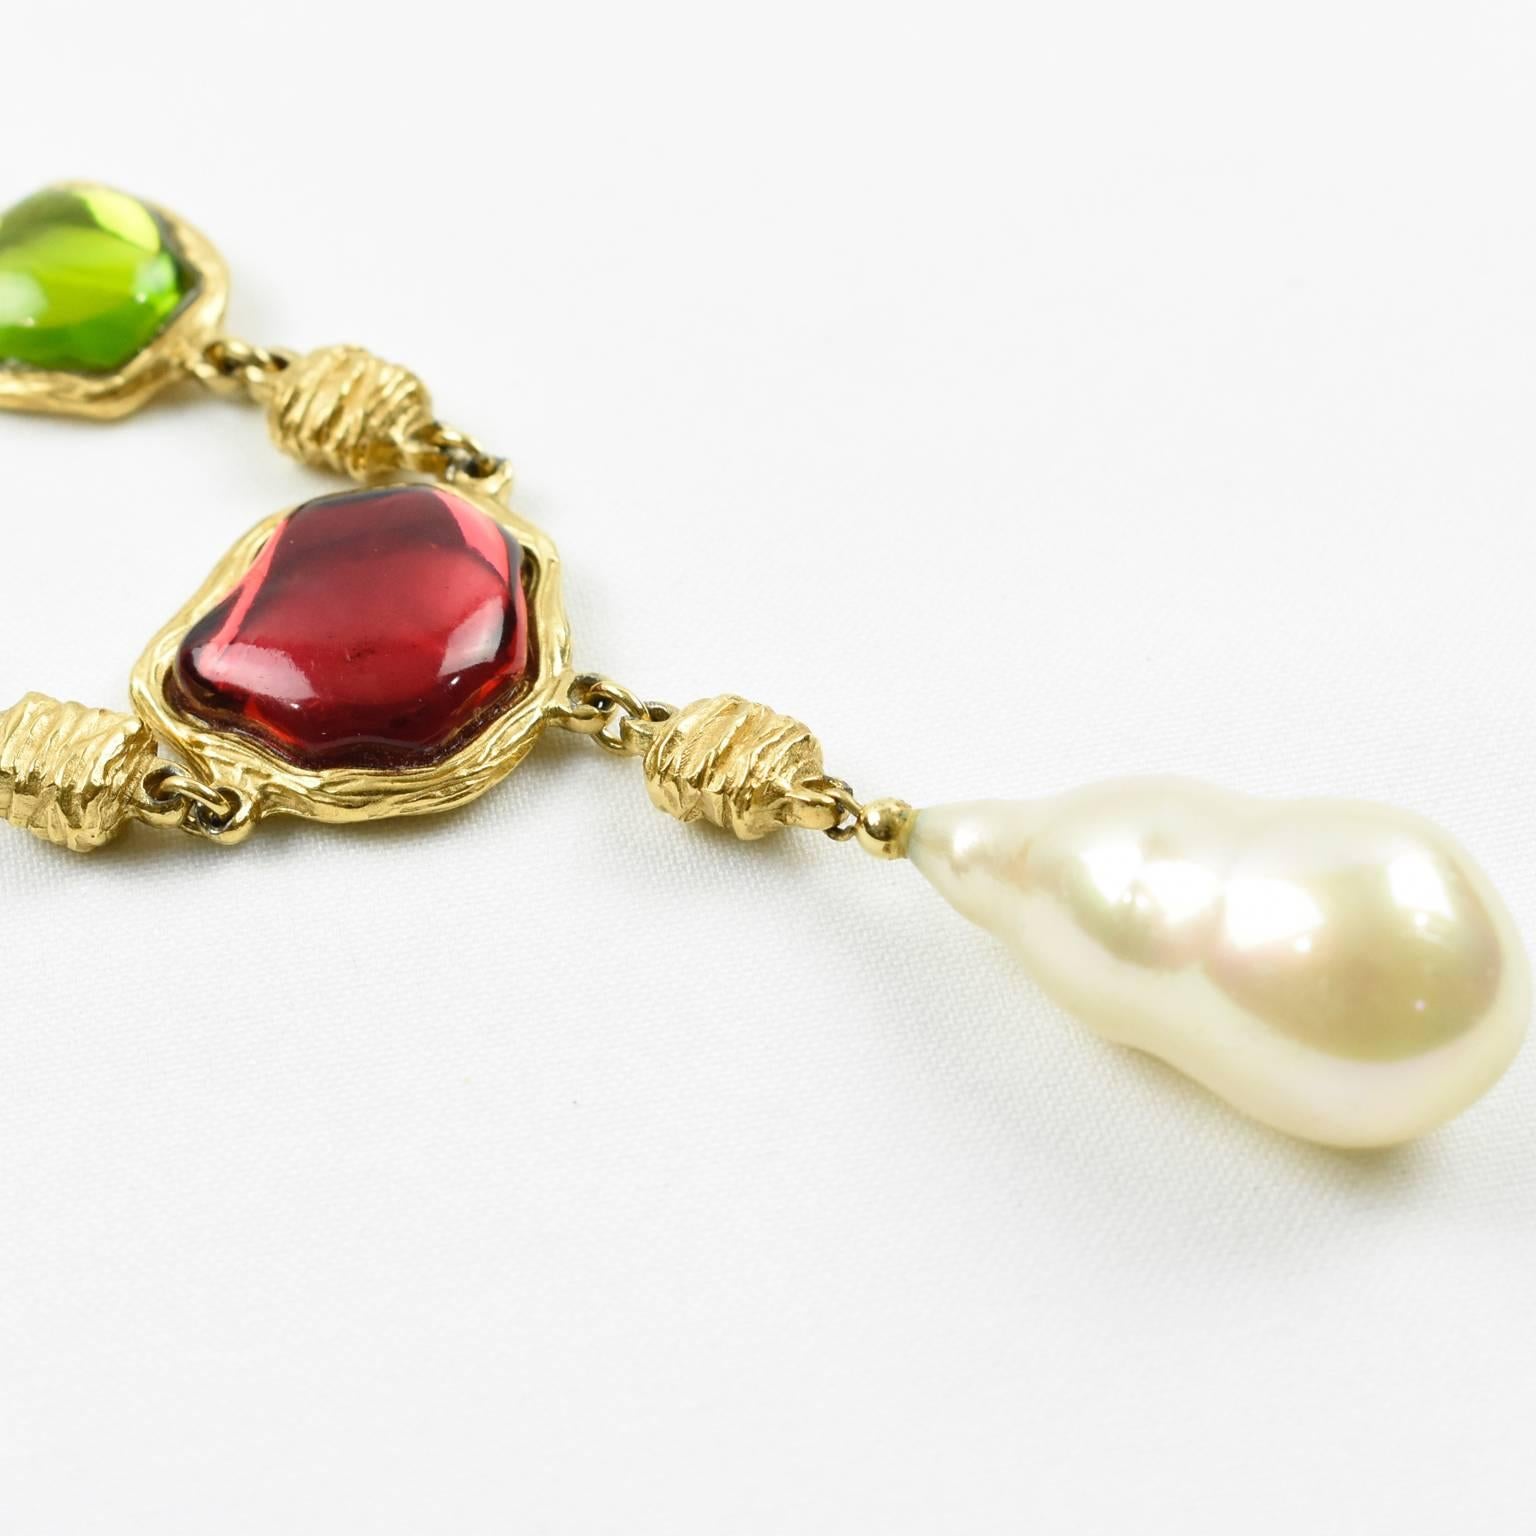 Charles Jourdan Paris Rare Gilt Metal Jeweled Necklace Multicolor Rhinestones 1